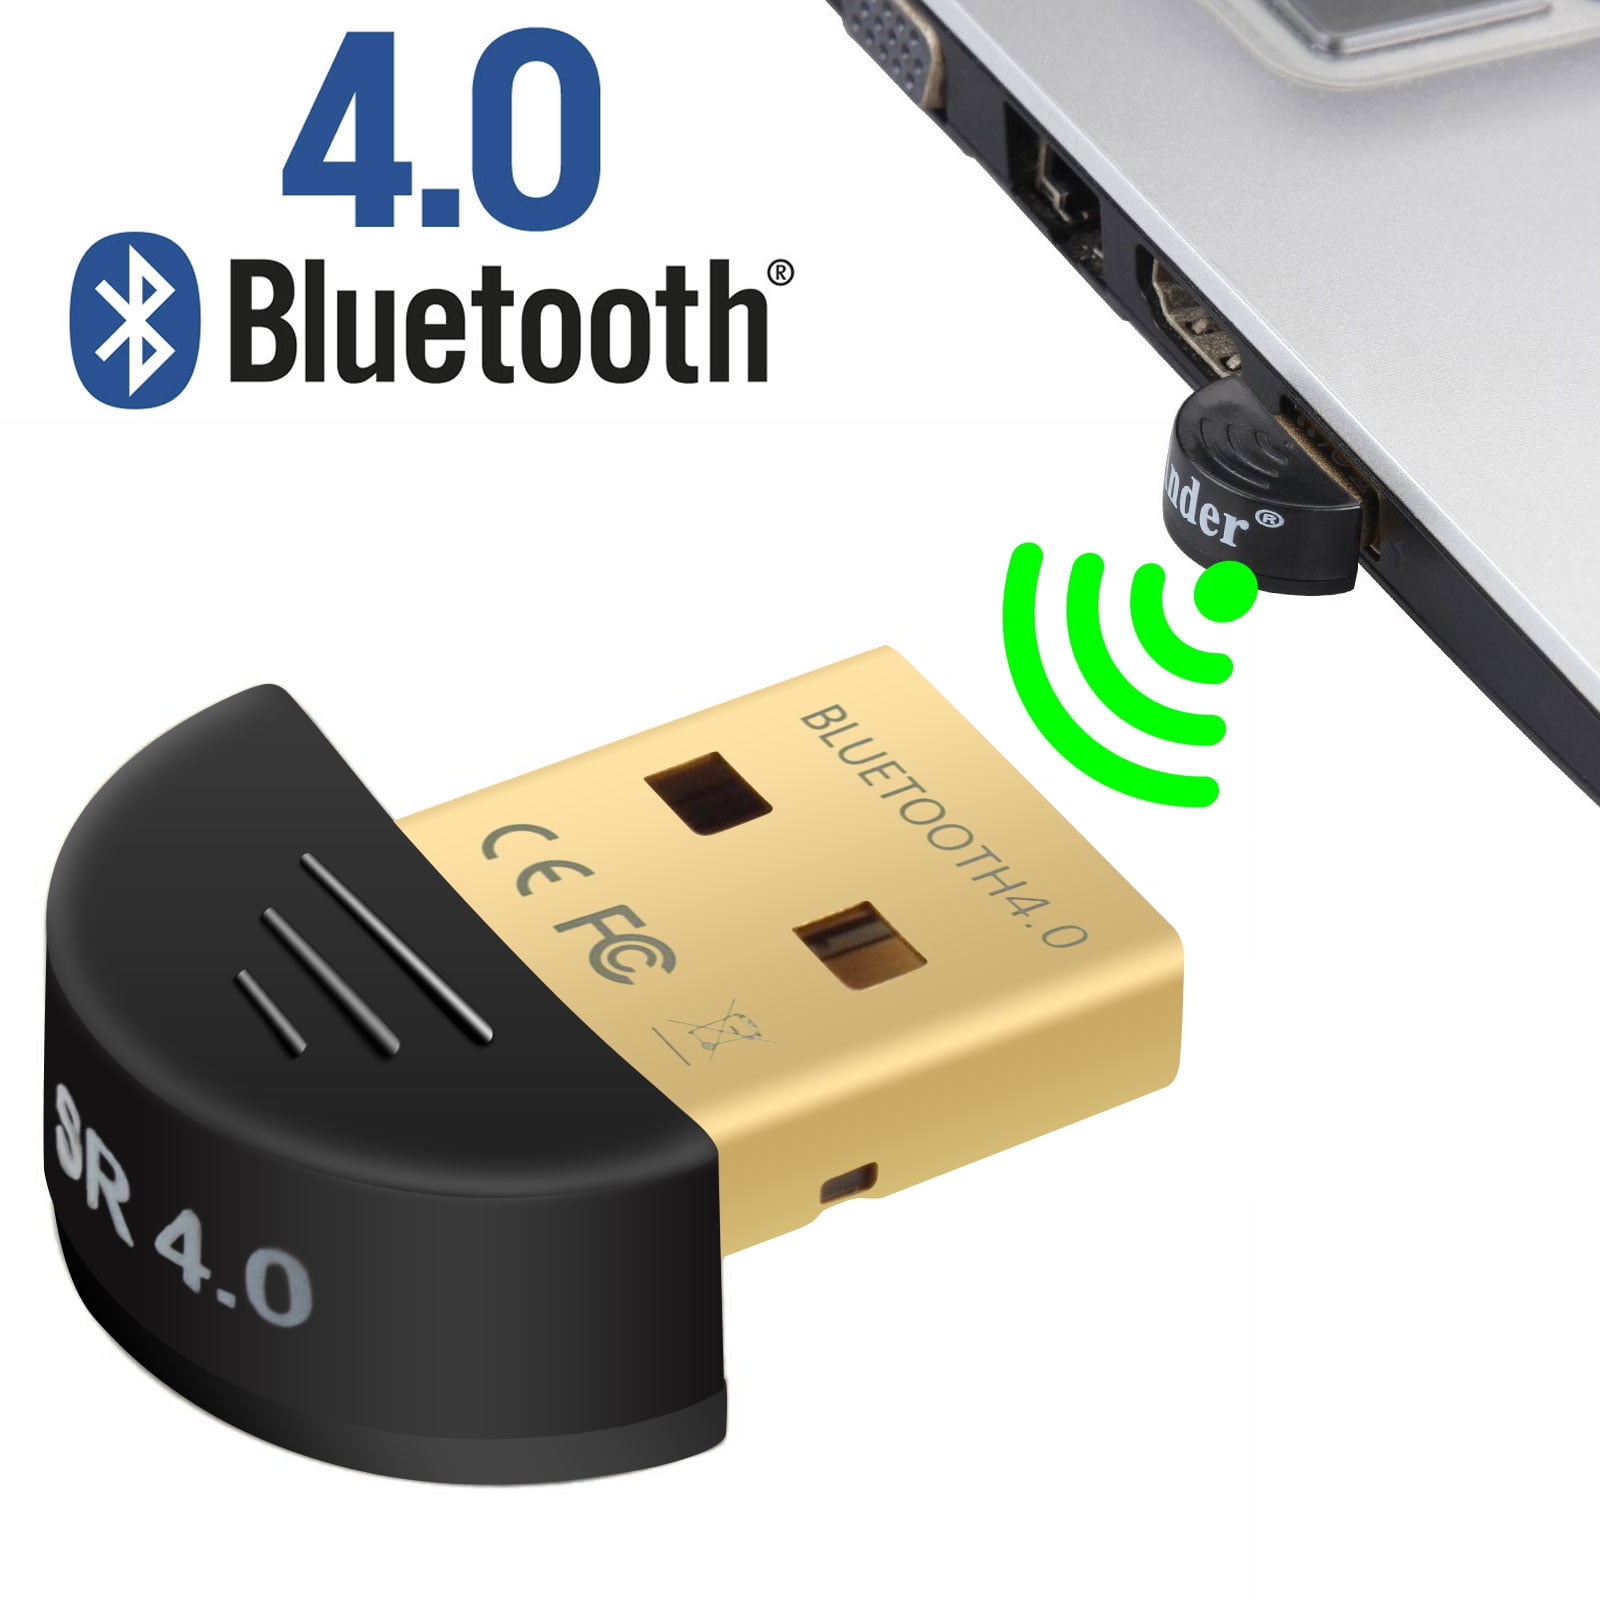 Bluetooth 4.0 USB 2.0 CSR 4.0 Dongle Adapter for PC LAPTOP WIN XP VISTA 7 8 10 